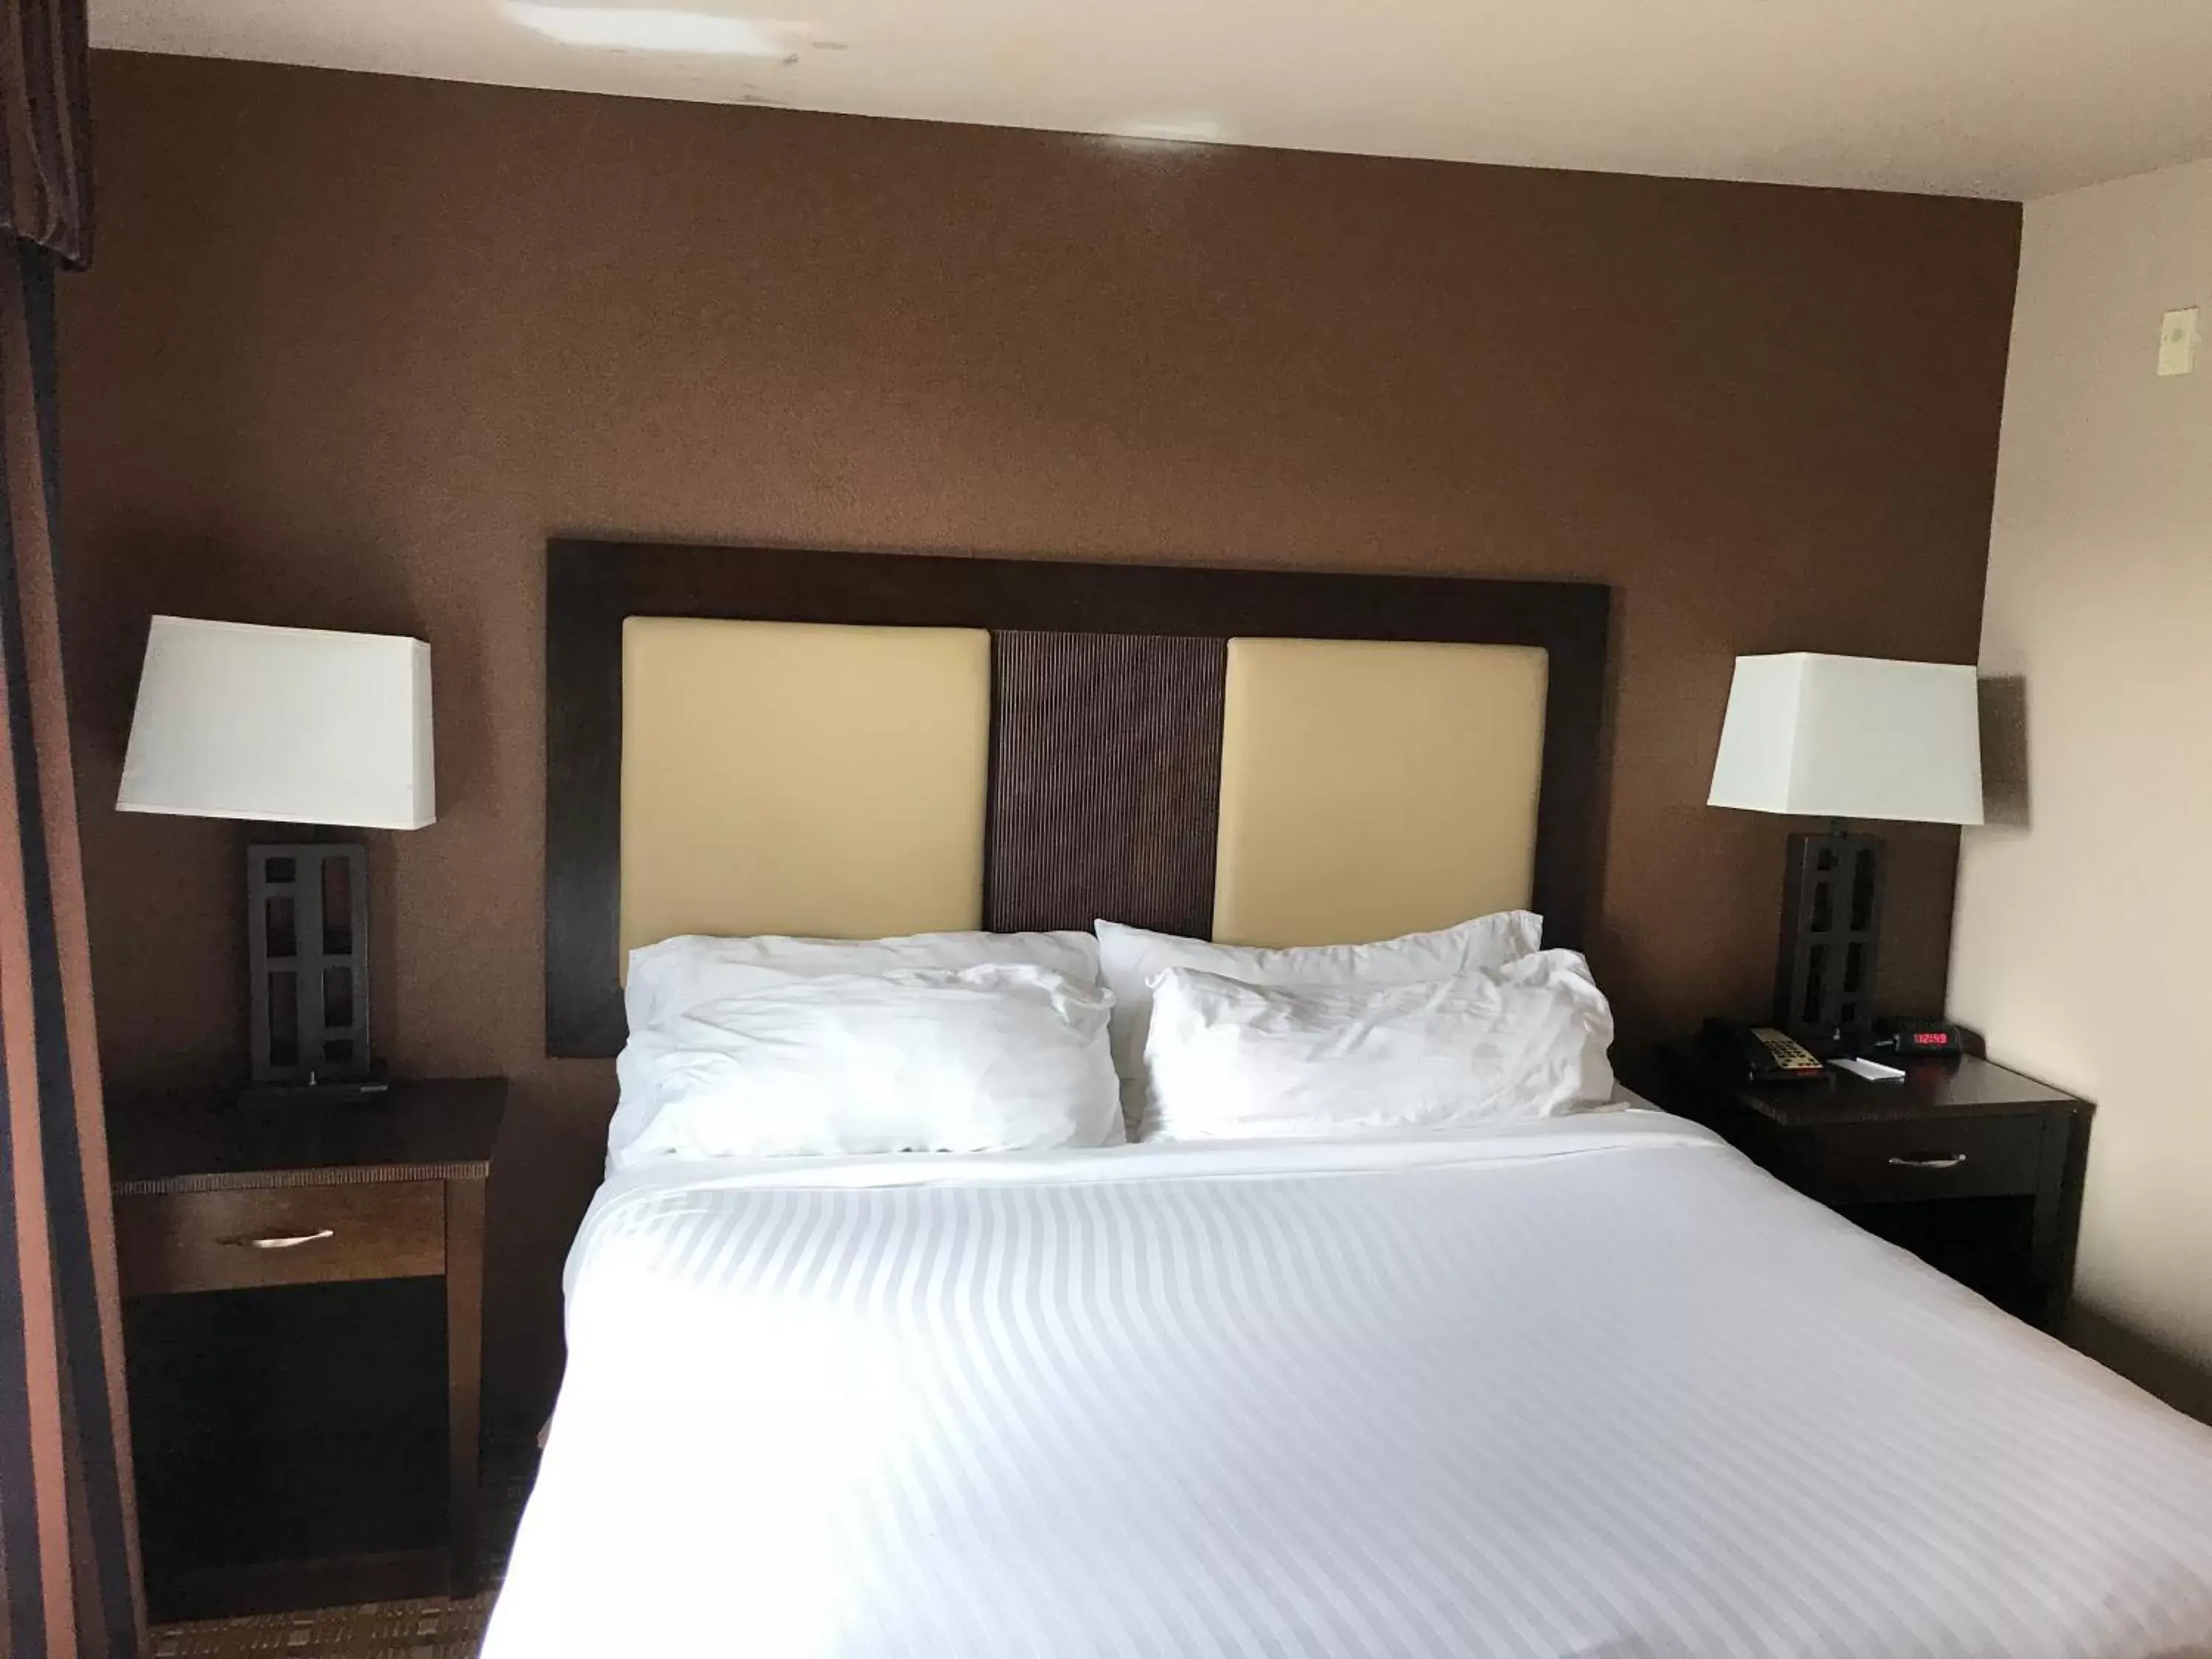 Bedroom, Bed in Country Inn & Suites, Murrells Inlet, SC